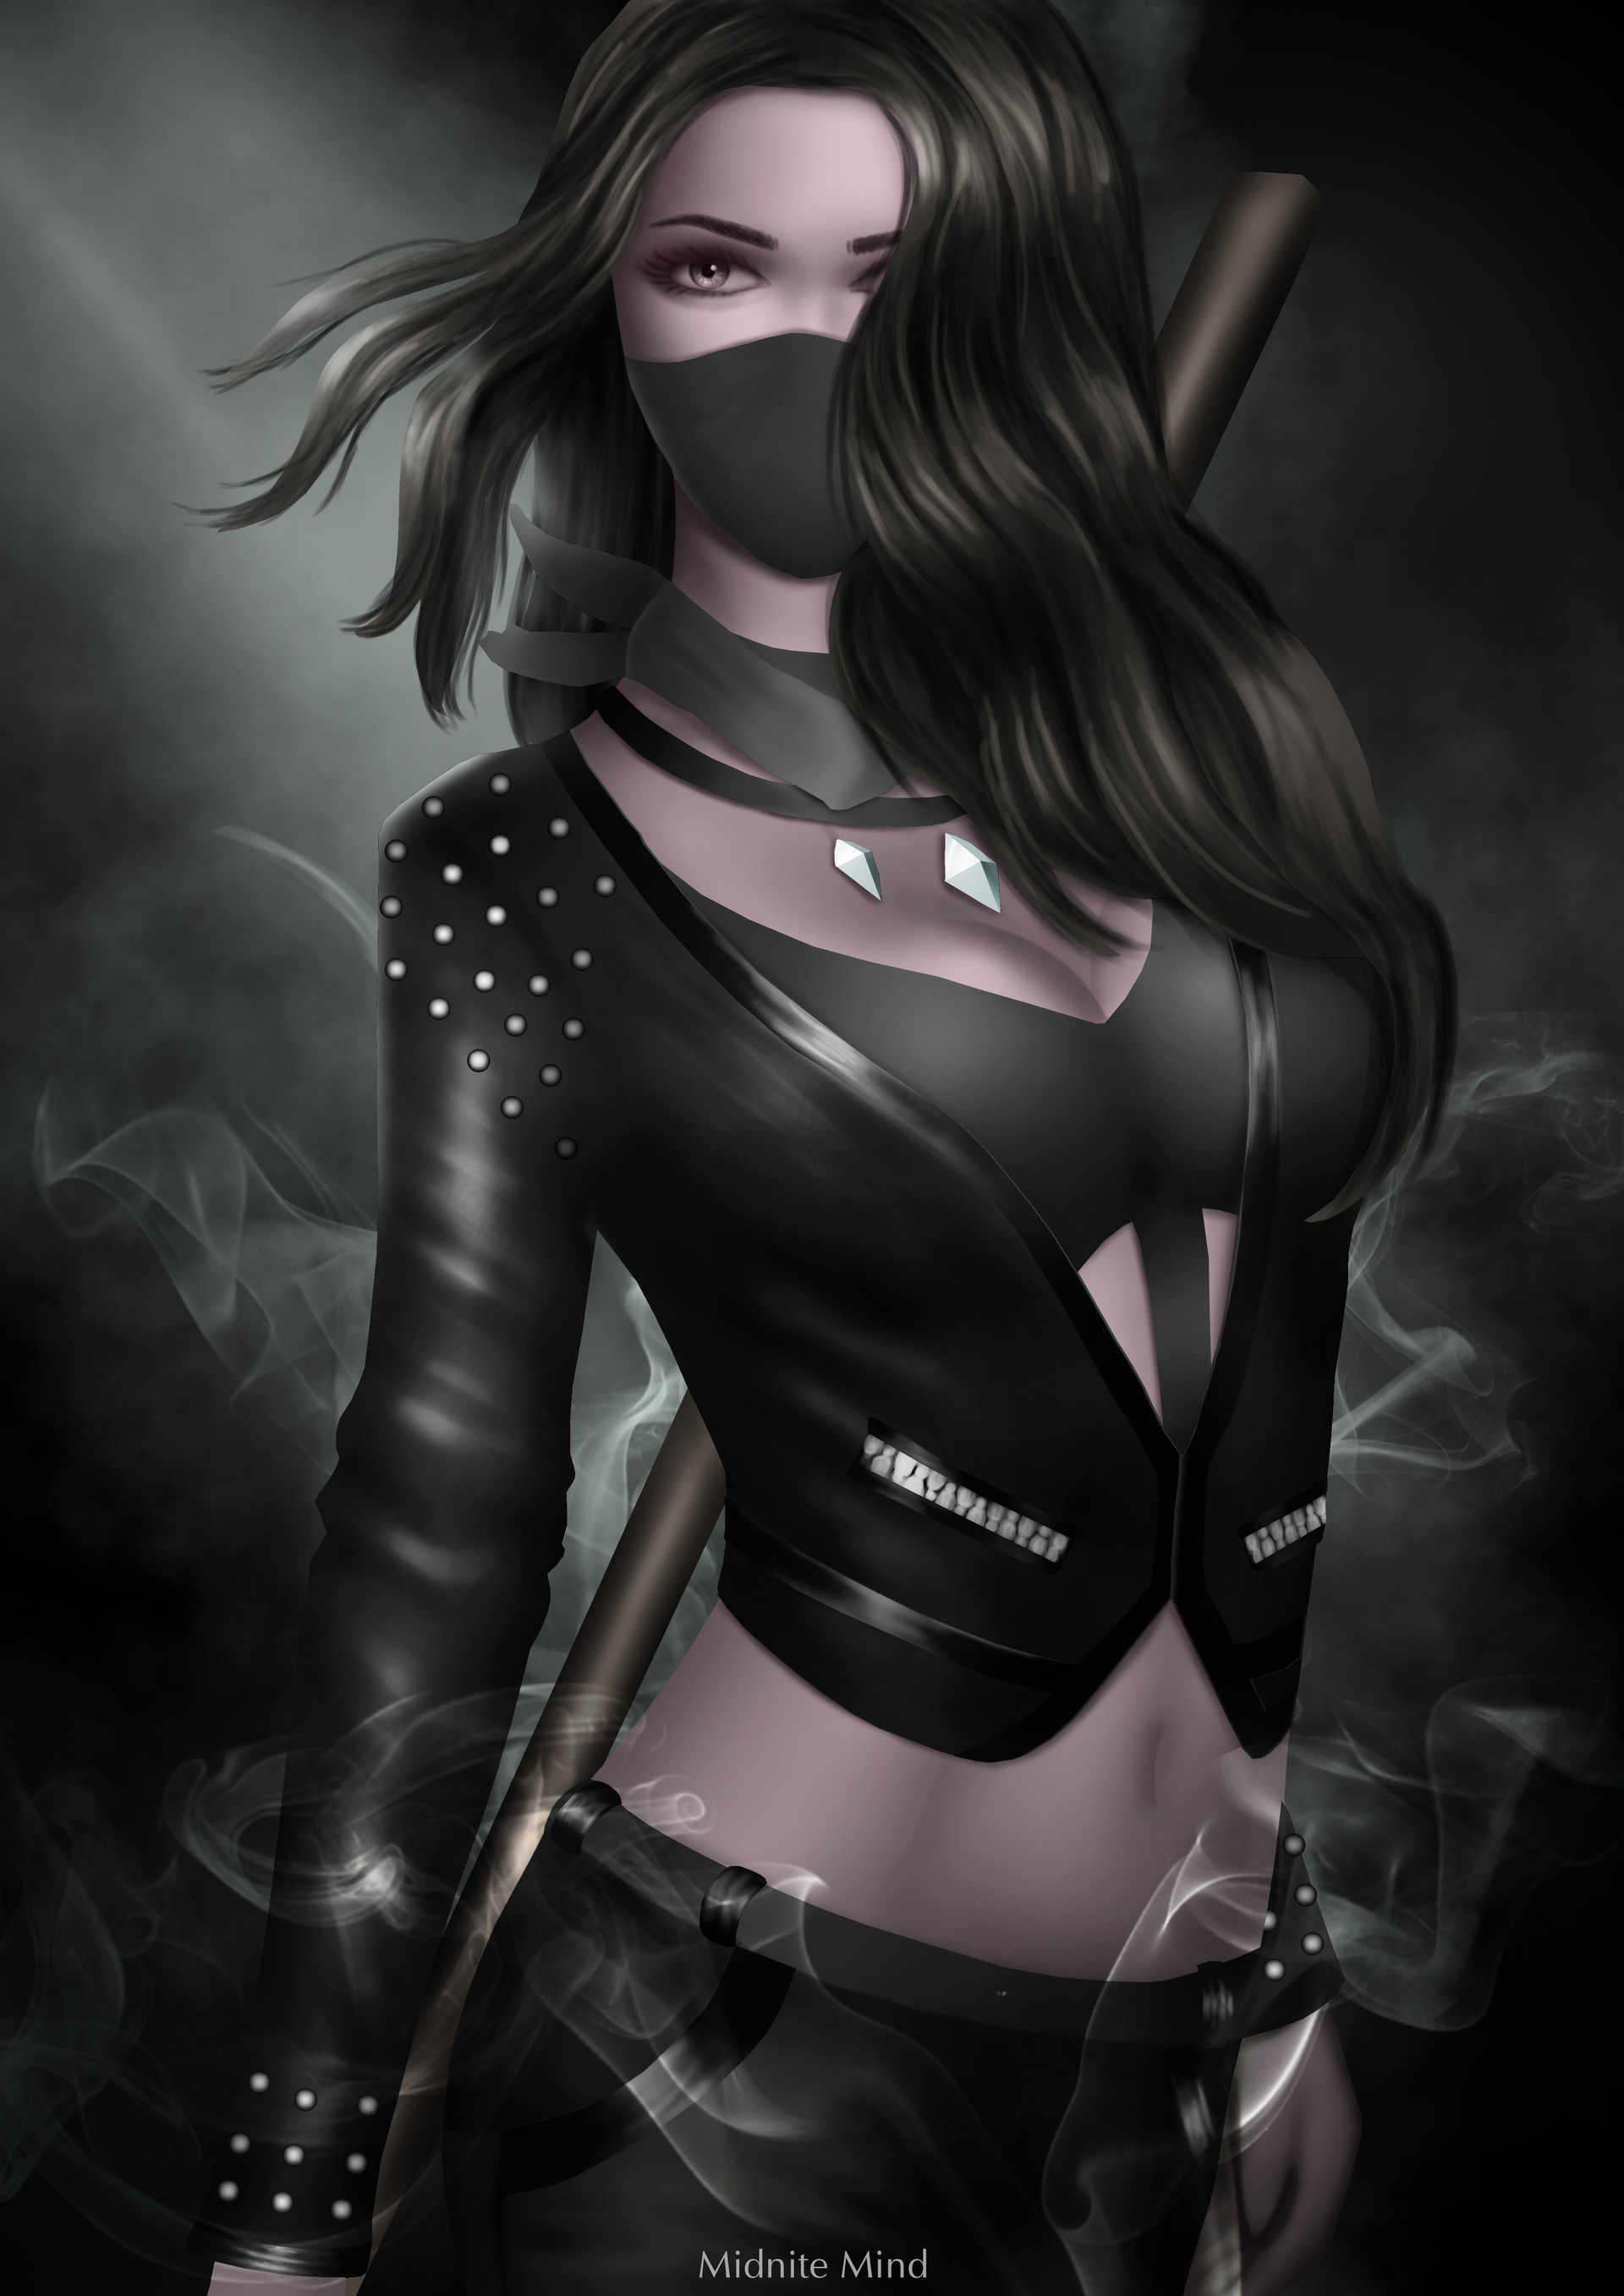 Anime gothic girl violet hair dark dress ruins by Geoserig on DeviantArt